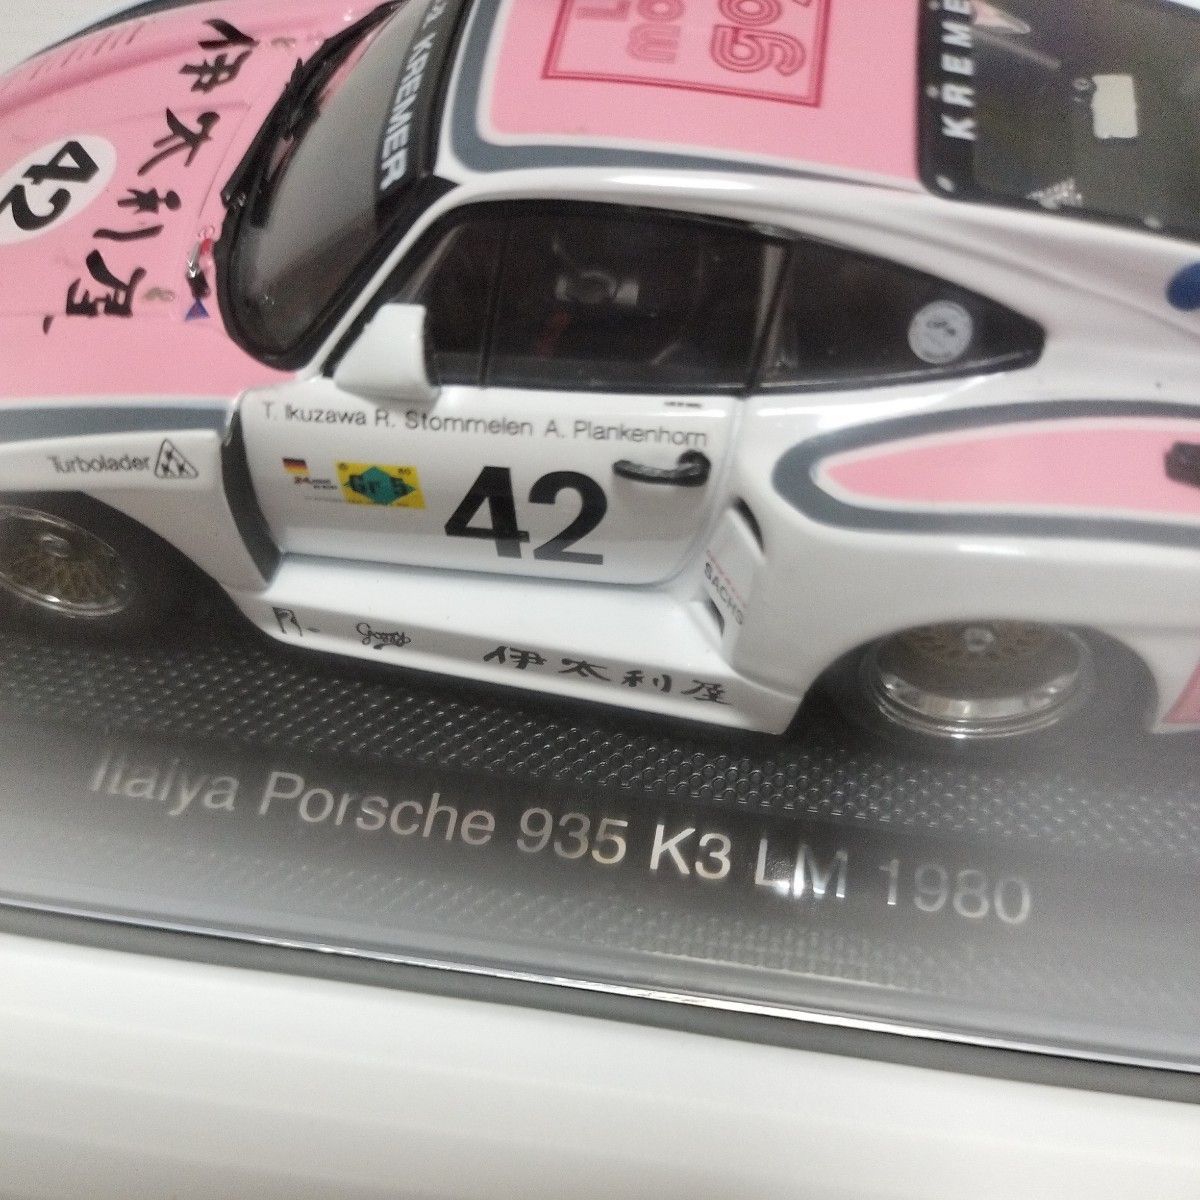 EBBRO「1/43 Porsche 935 K3」 1980年 ル・マン #42 生沢 徹 ポルシェ 伊太利亜屋 エブロ - メルカリ